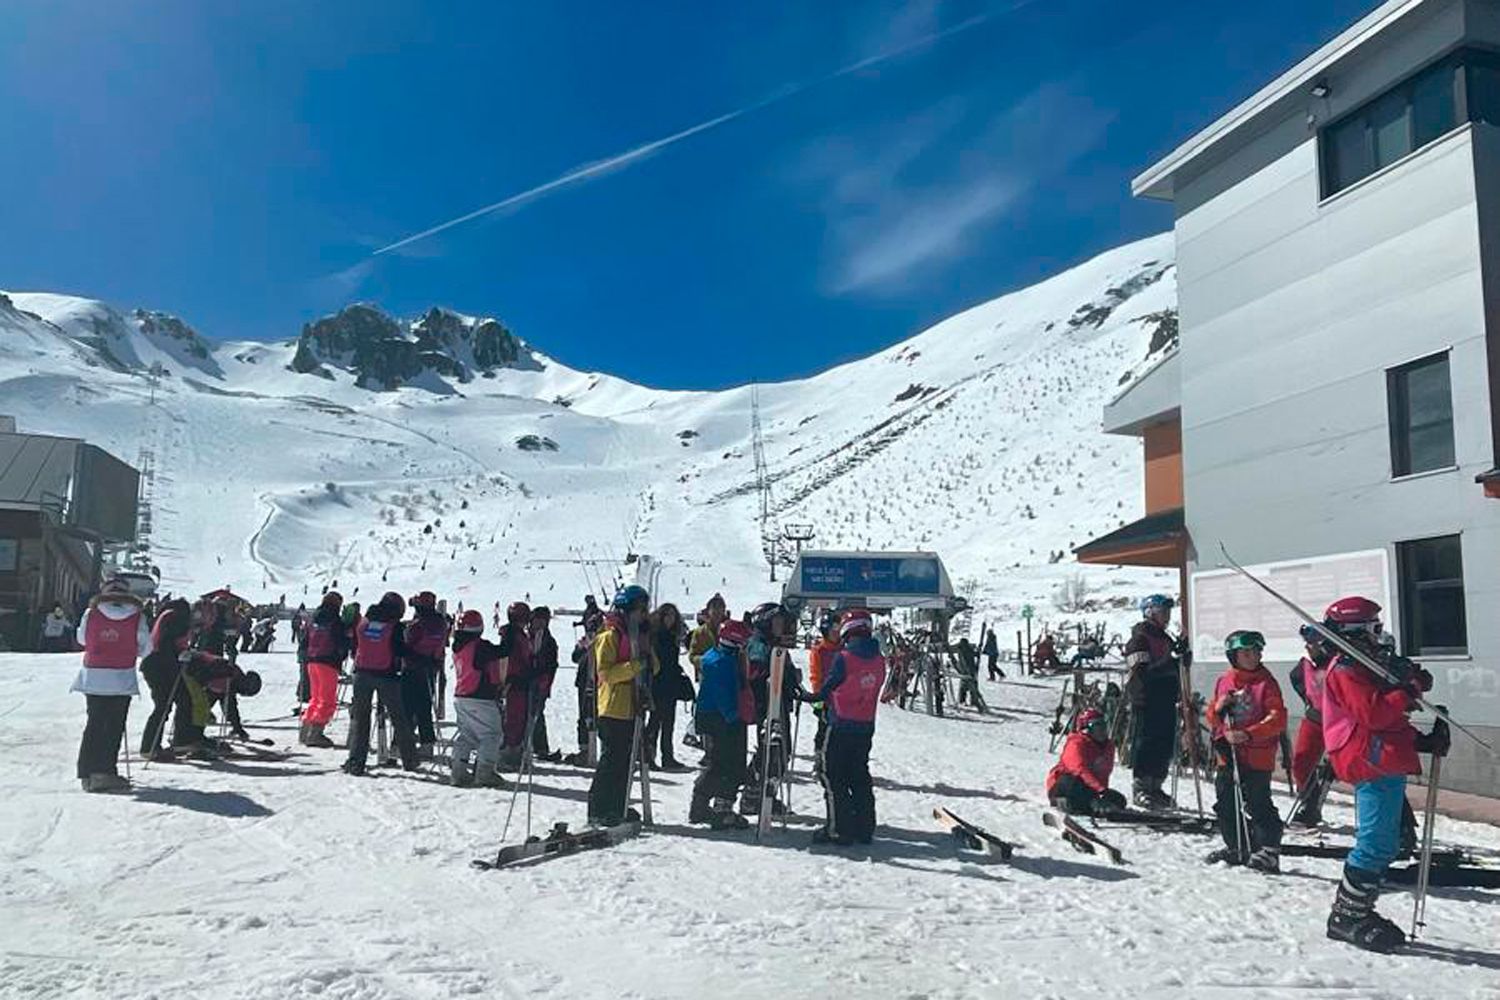 Estación de esquí de San Isidro en León